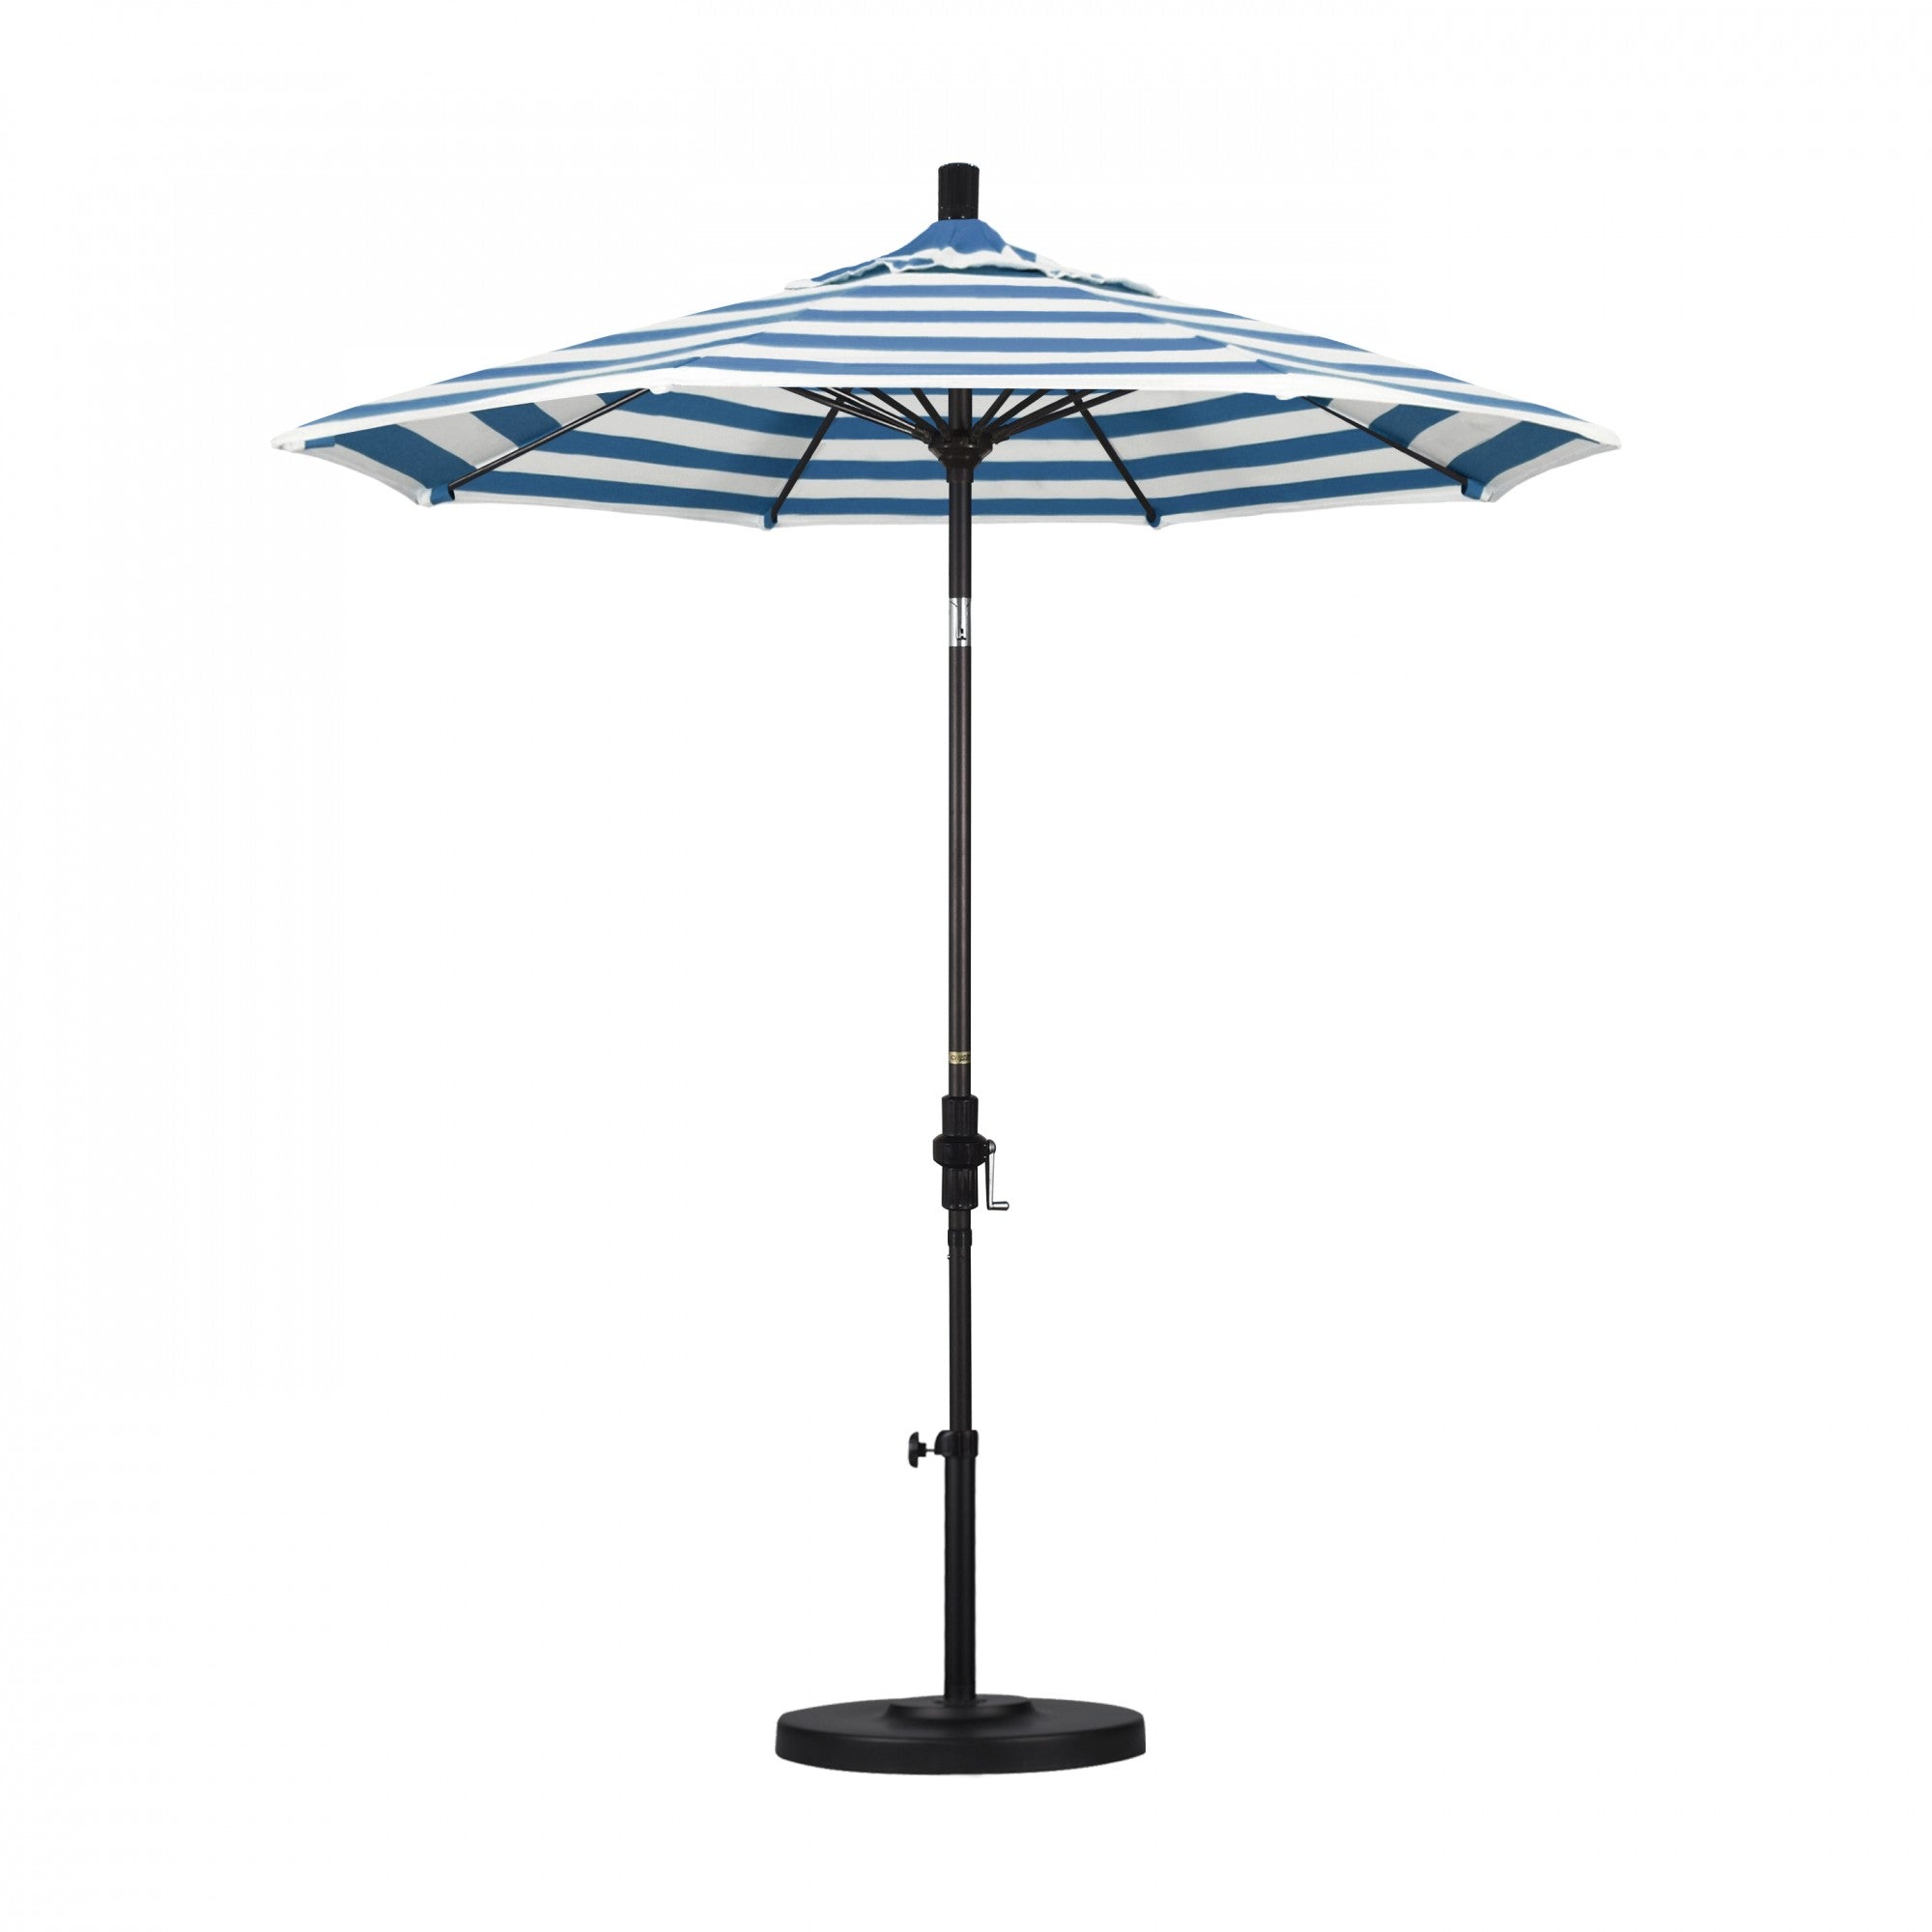 California Umbrella - 7.5' - Patio Umbrella Umbrella - Aluminum Pole - Cabana Regatta  - Sunbrella  - GSCUF758117-58029